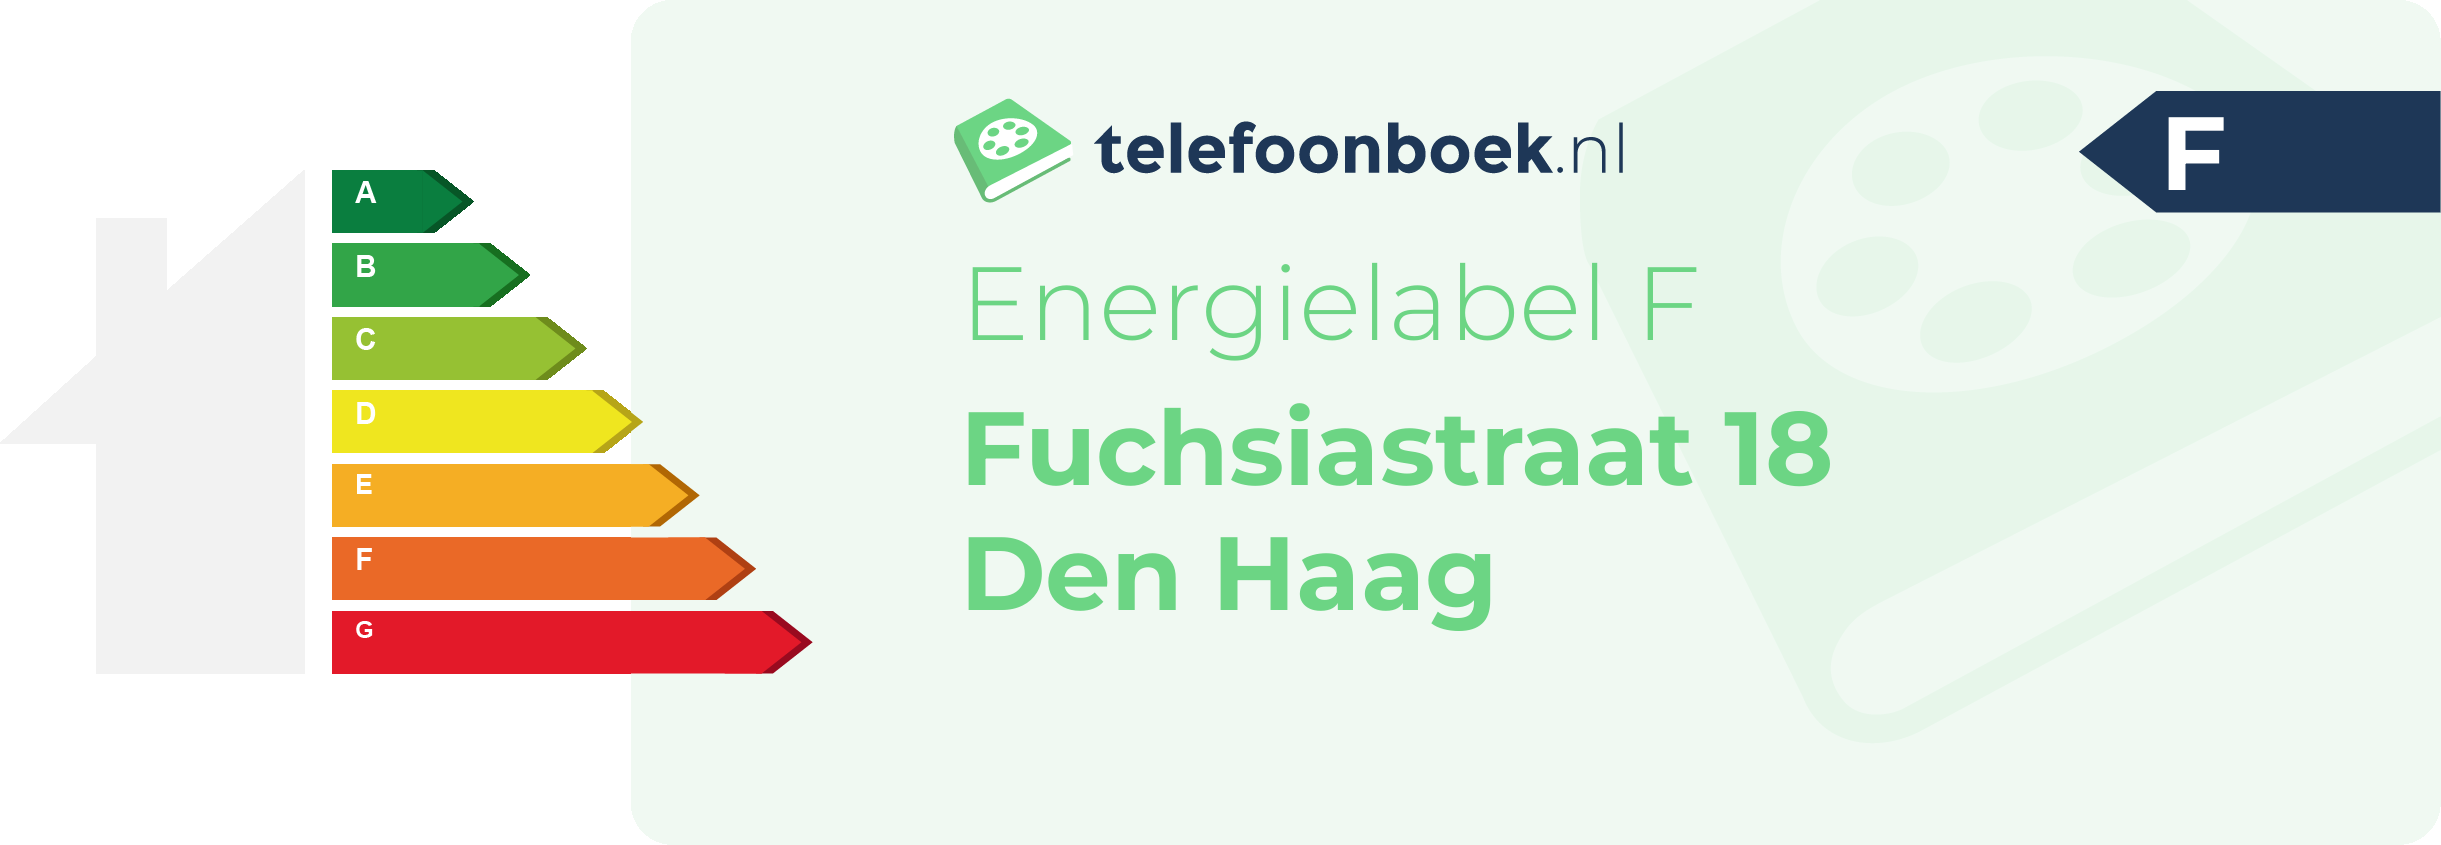 Energielabel Fuchsiastraat 18 Den Haag